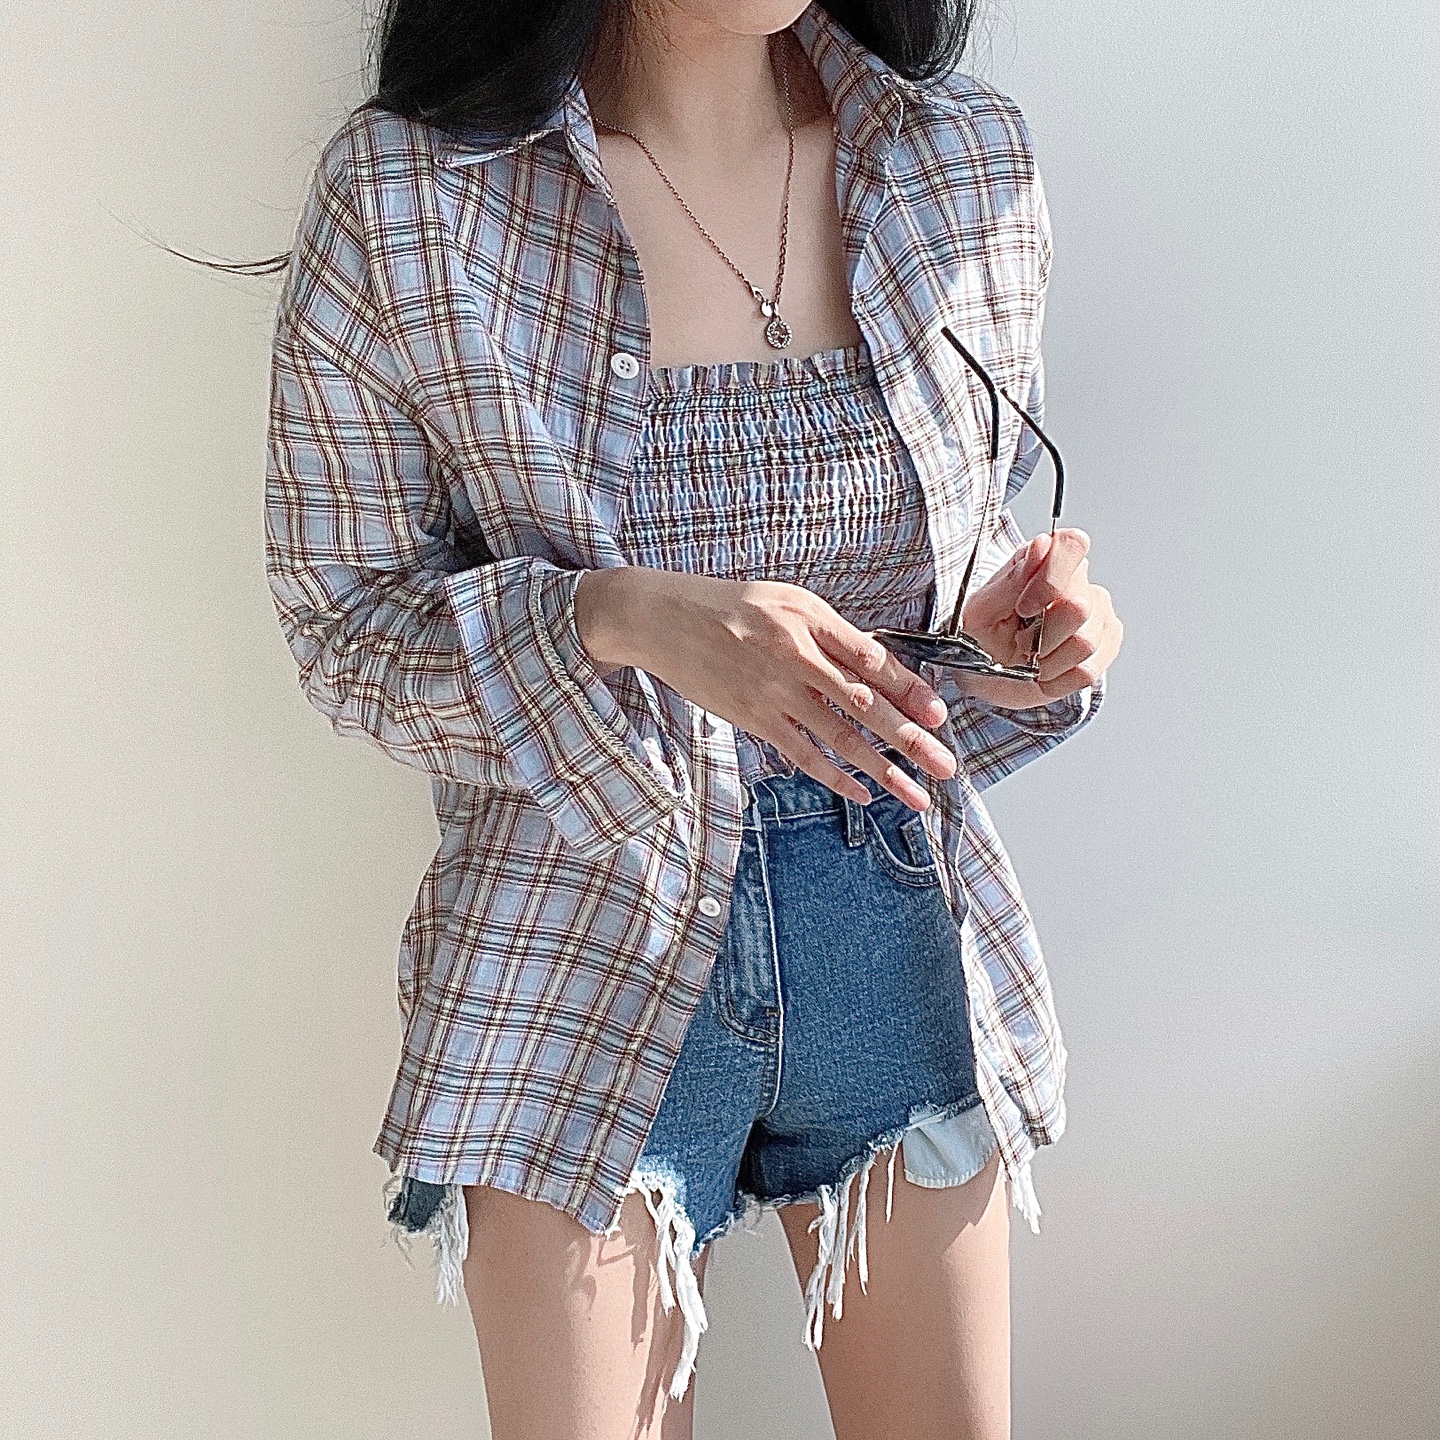 Sona チェックシャツ チェックブラトップｓｅｔ 10代 代女性ファッション韓国通販